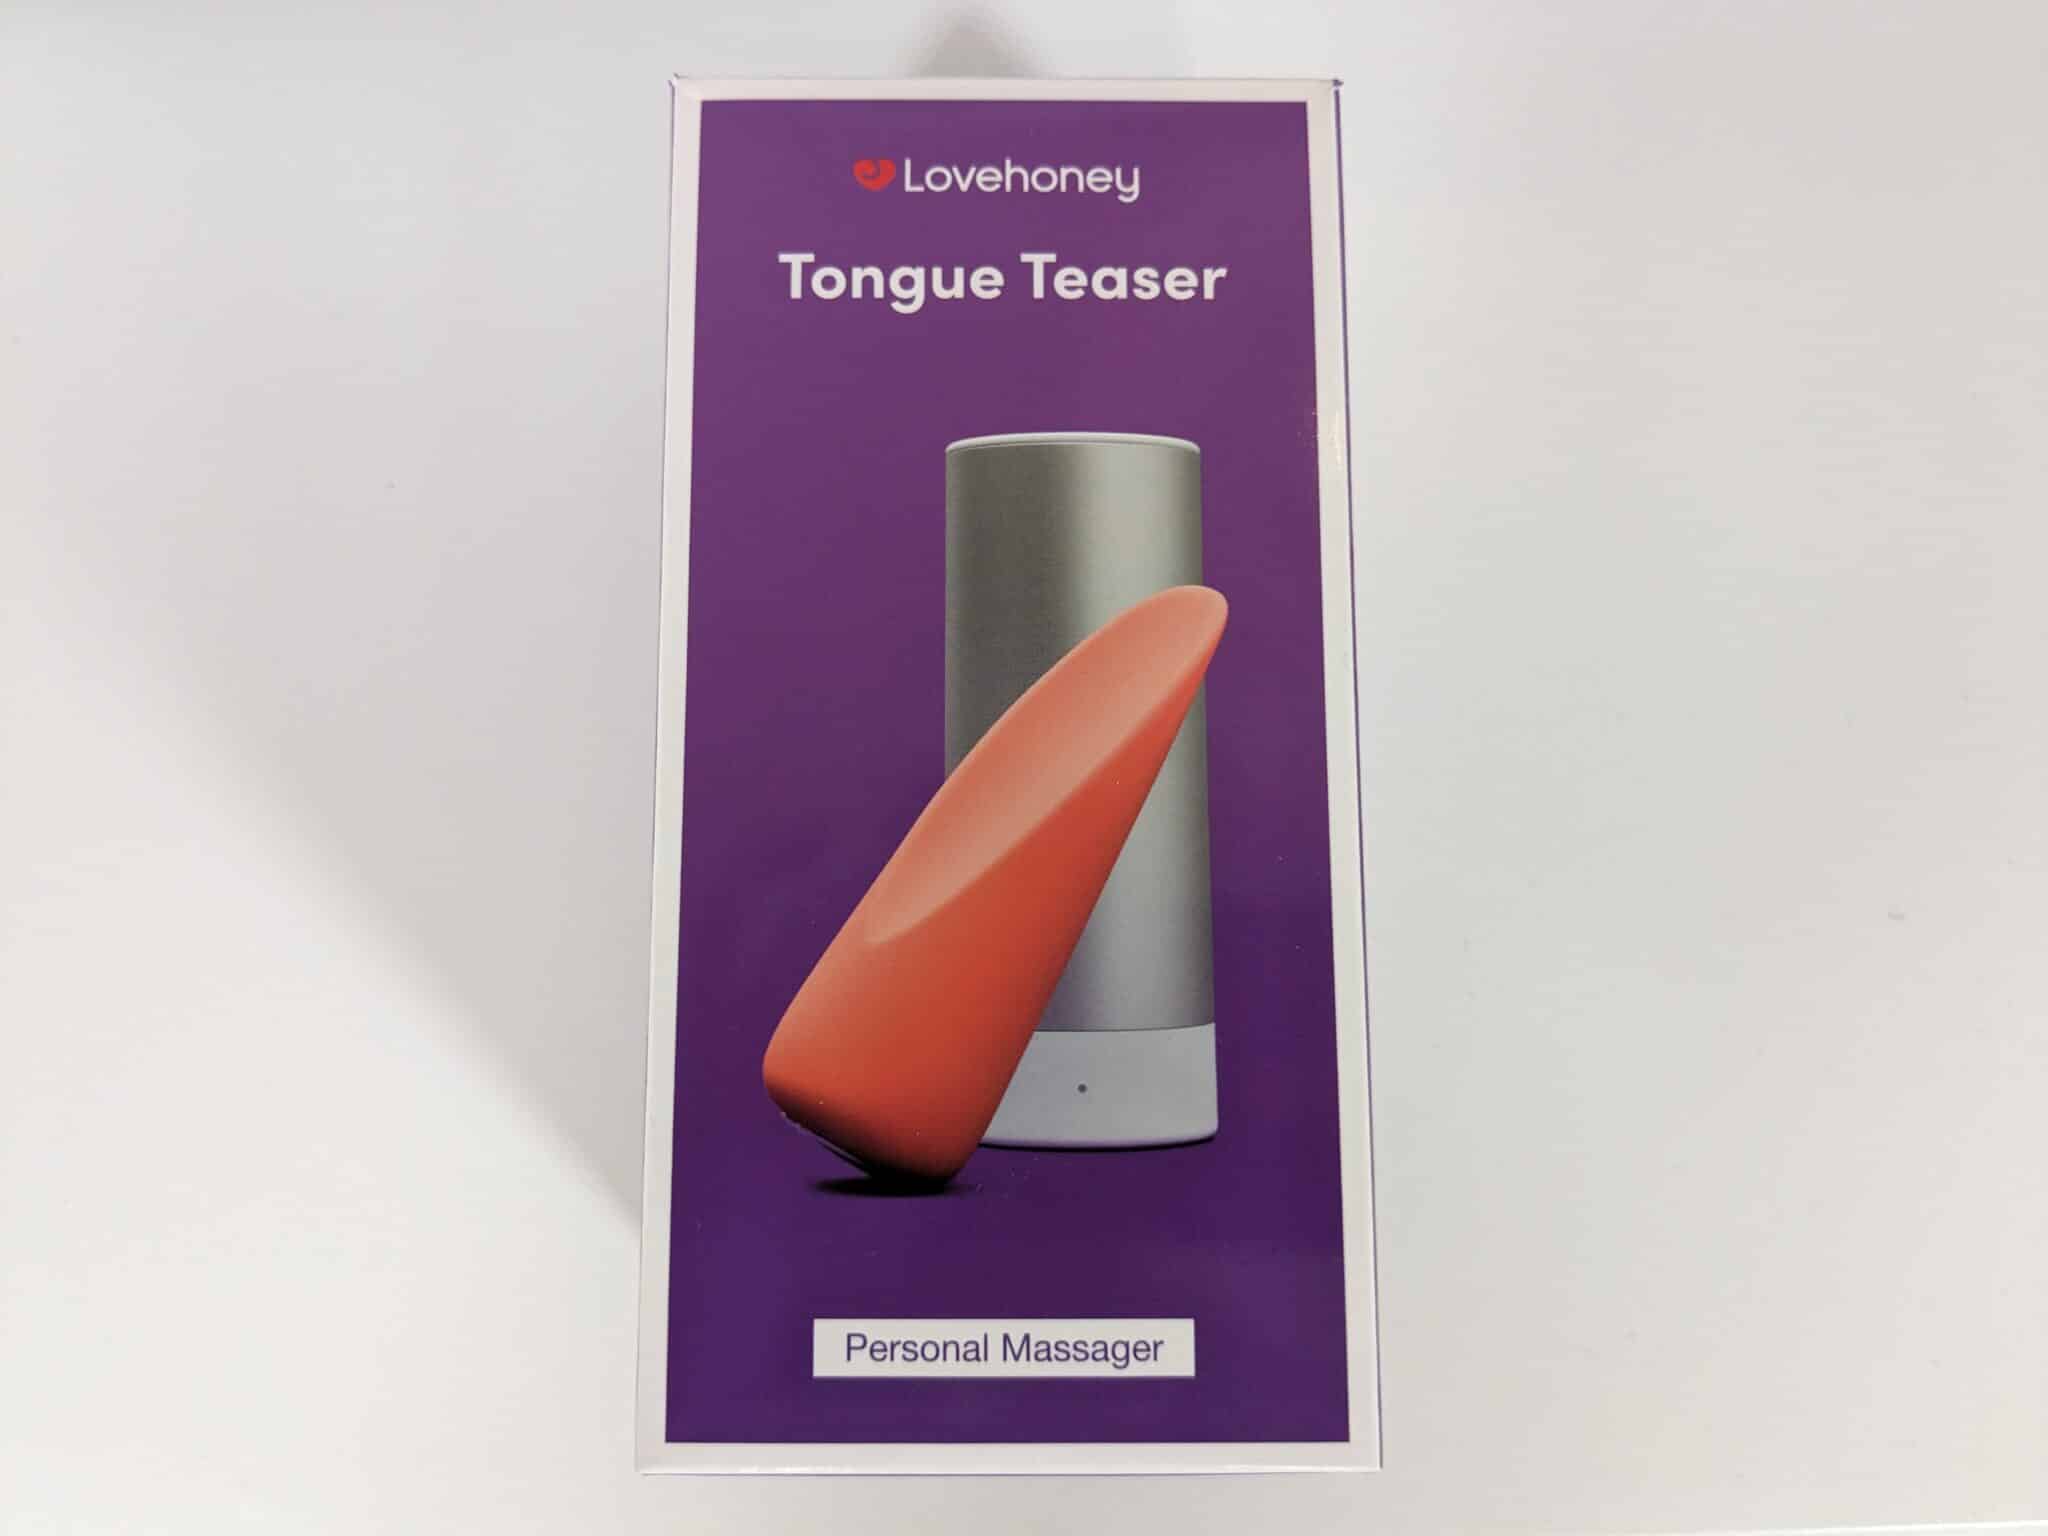 Lovehoney Tongue Teaser Vibrator The Art of Presentation: The Lovehoney Tongue Teaser Vibrator’s Packaging